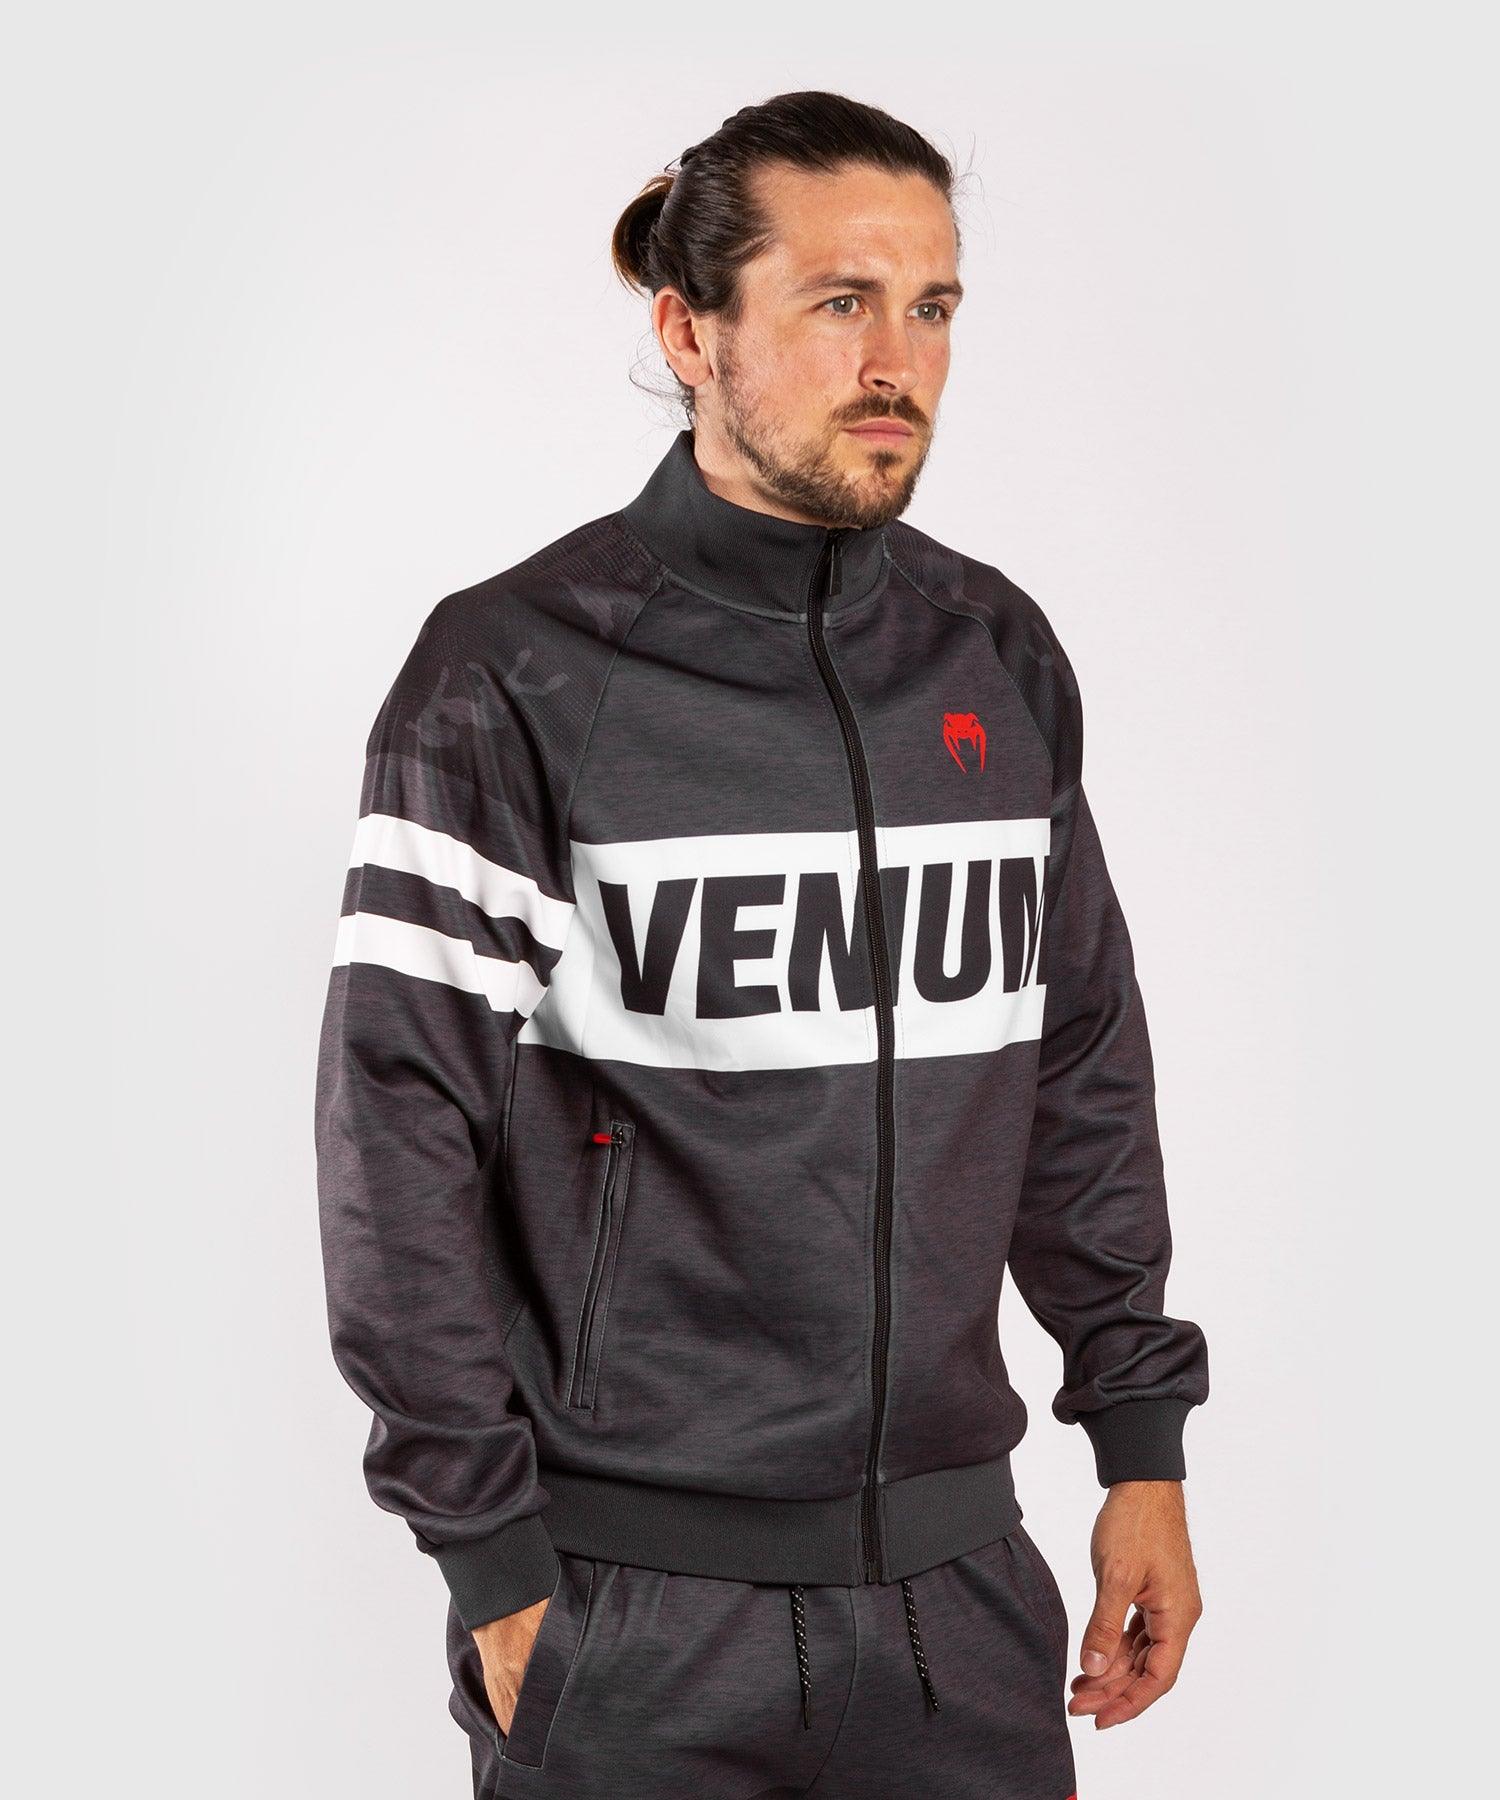 Venum Bandit Sweatshirt - Black/Grey Picture 3